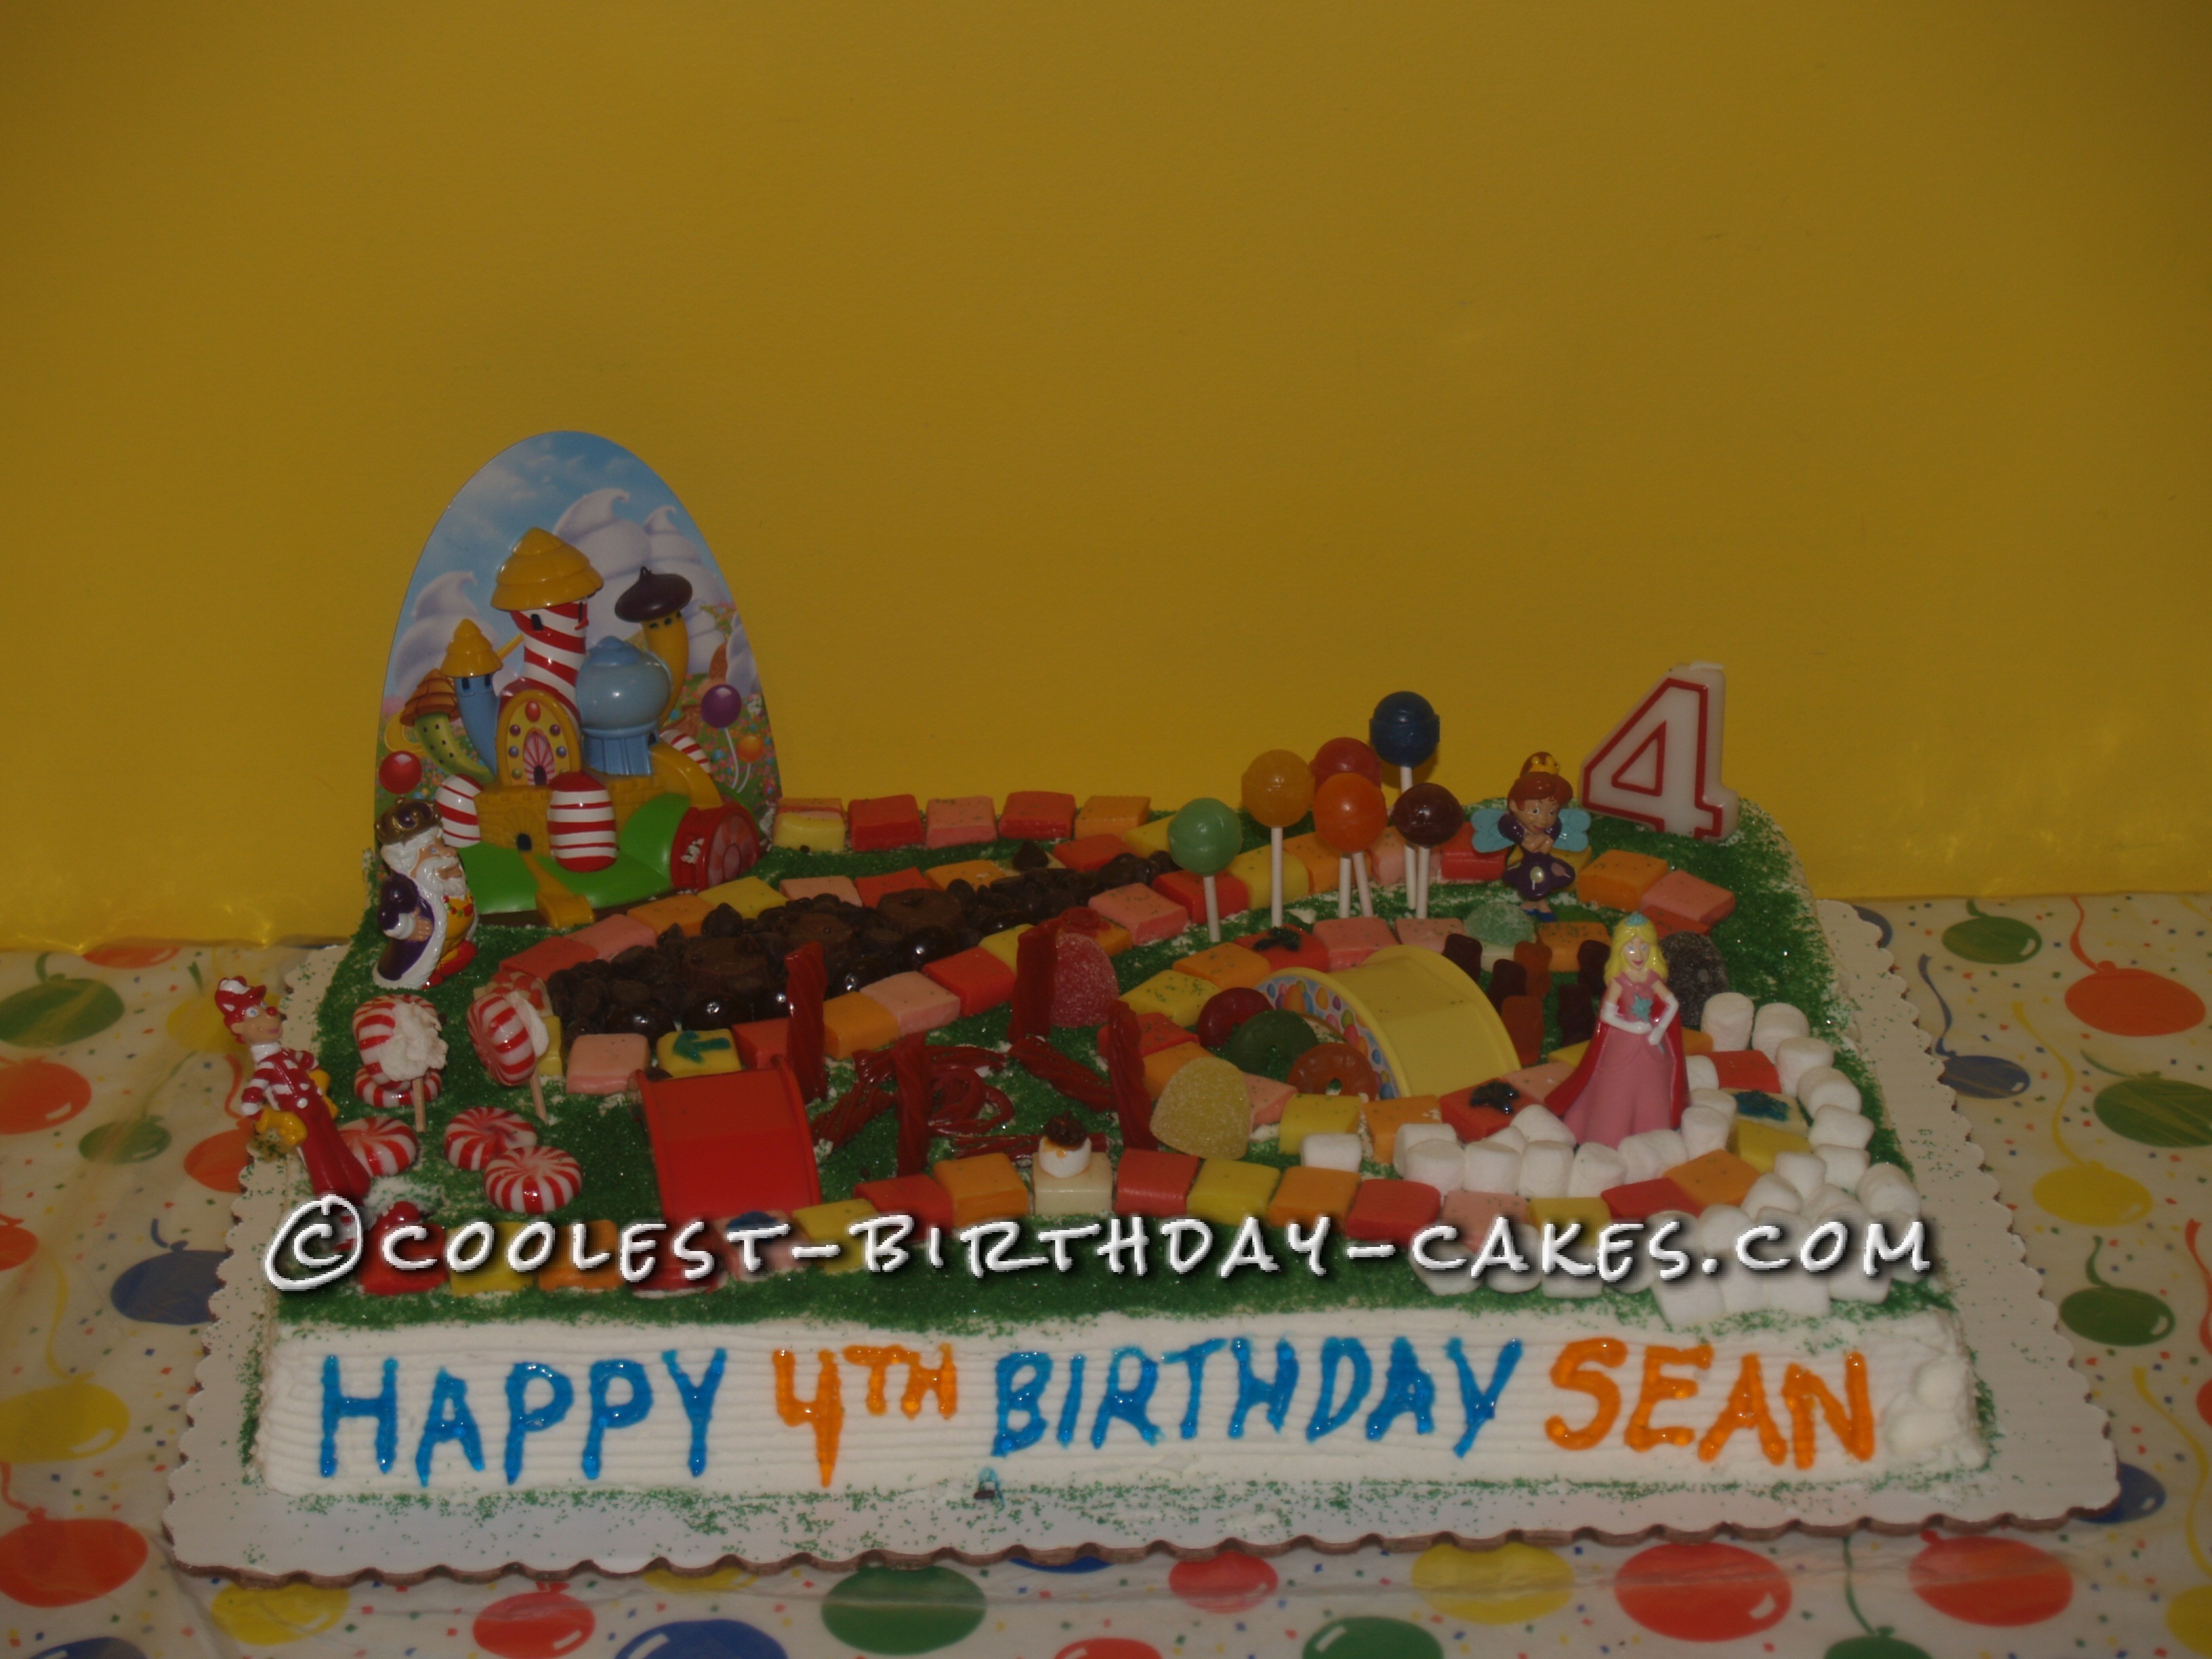 Coolest Candyland Birthday Cake